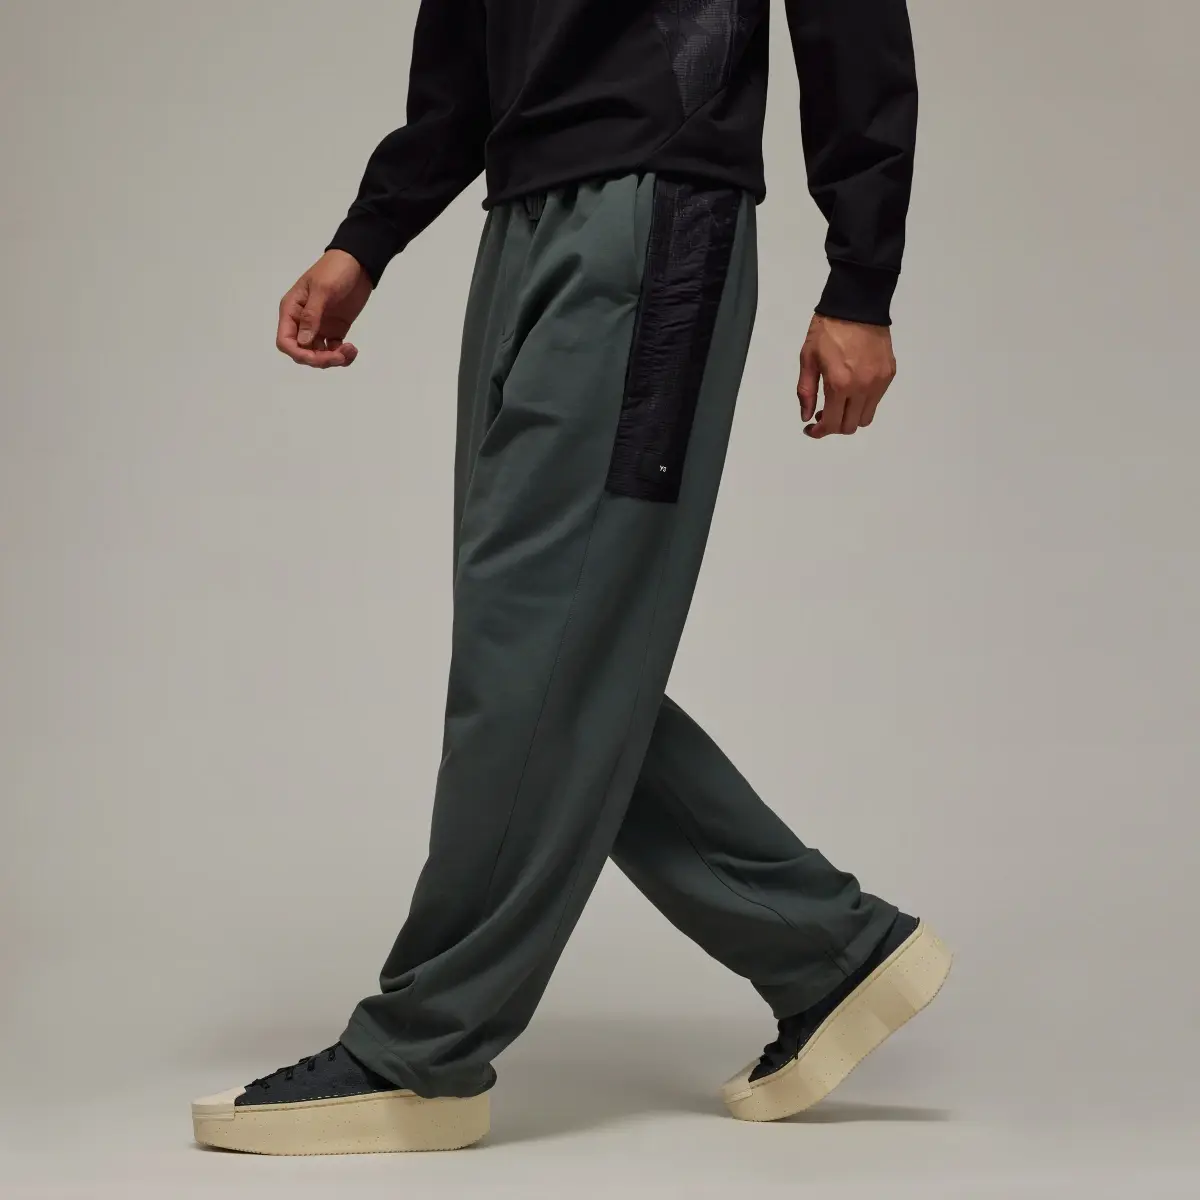 Adidas Y-3 Stretch Terry Pants. 2